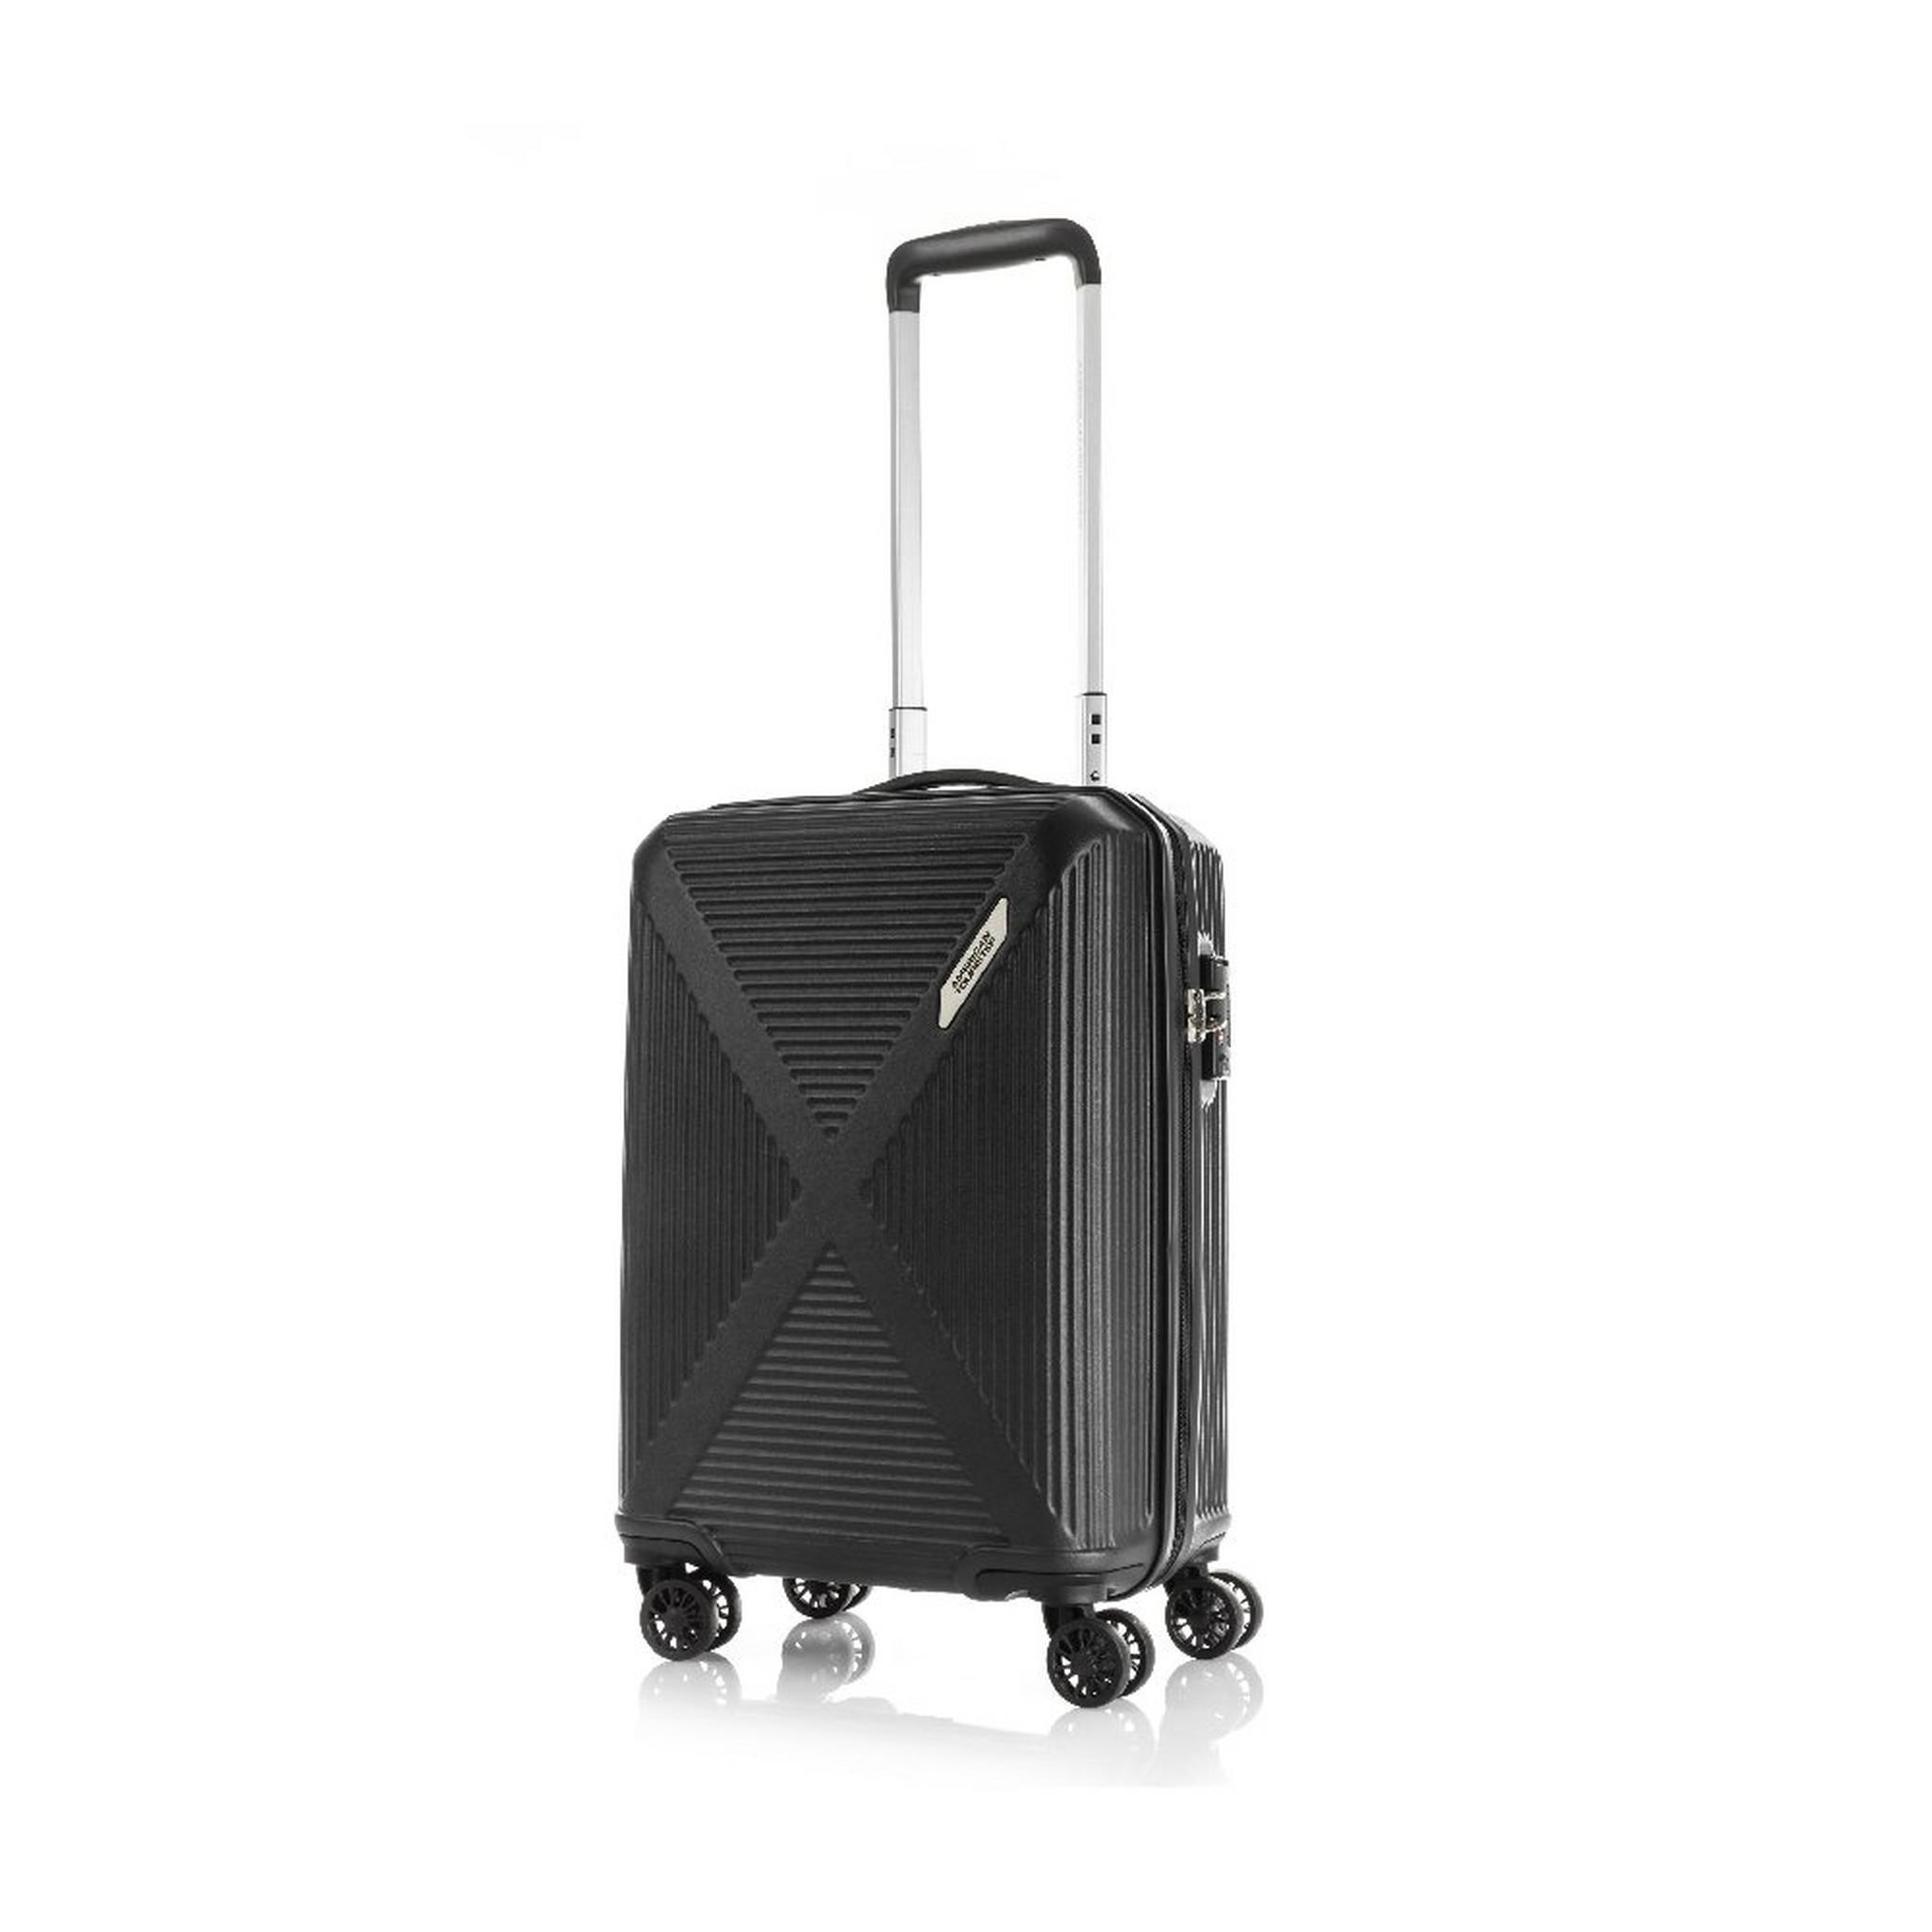 حقيبة سفر كواترو بجوانب صلبة وعجلات دوارة من اميركان تورستر، 68سم، HN1X09002 – أسود